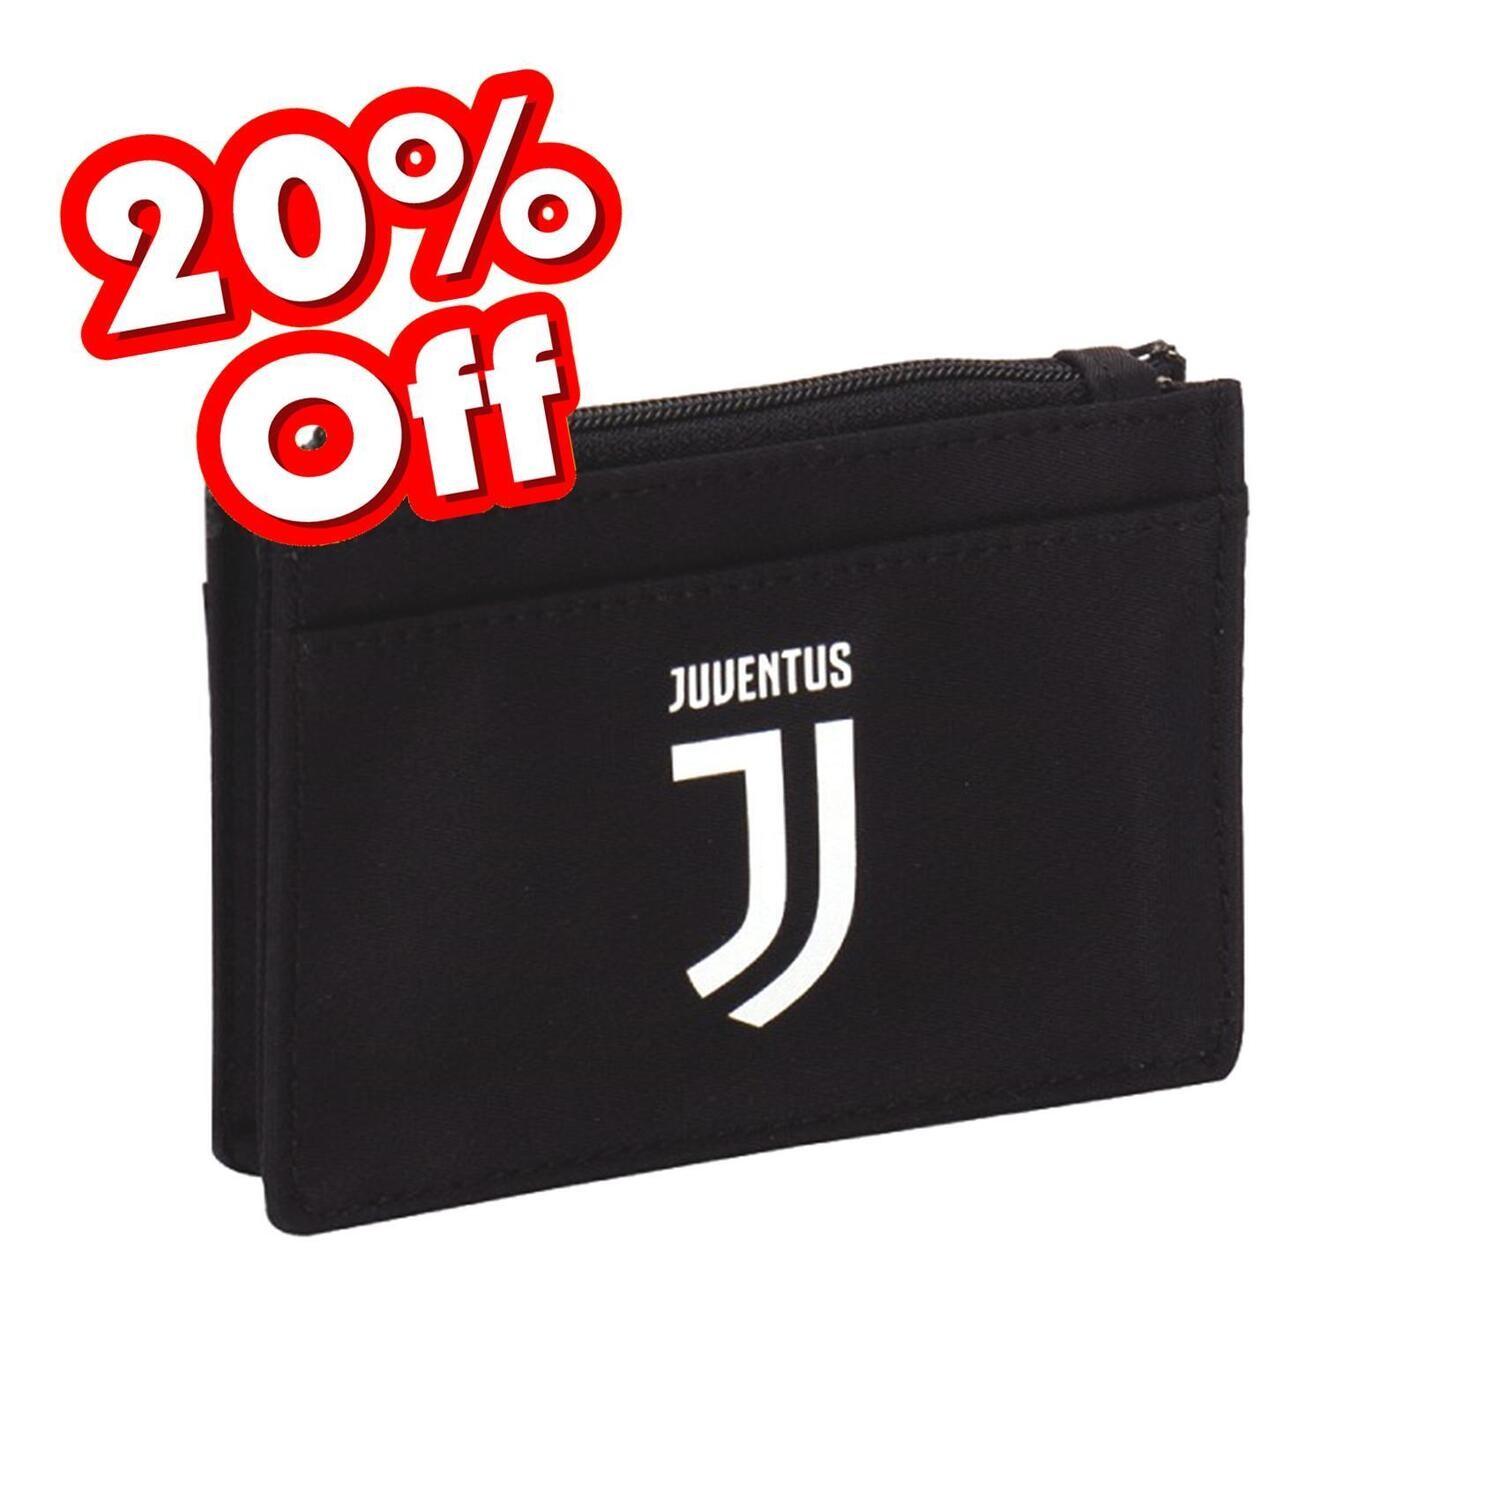 Juventus Portamonete rettangolare con zip Black & White